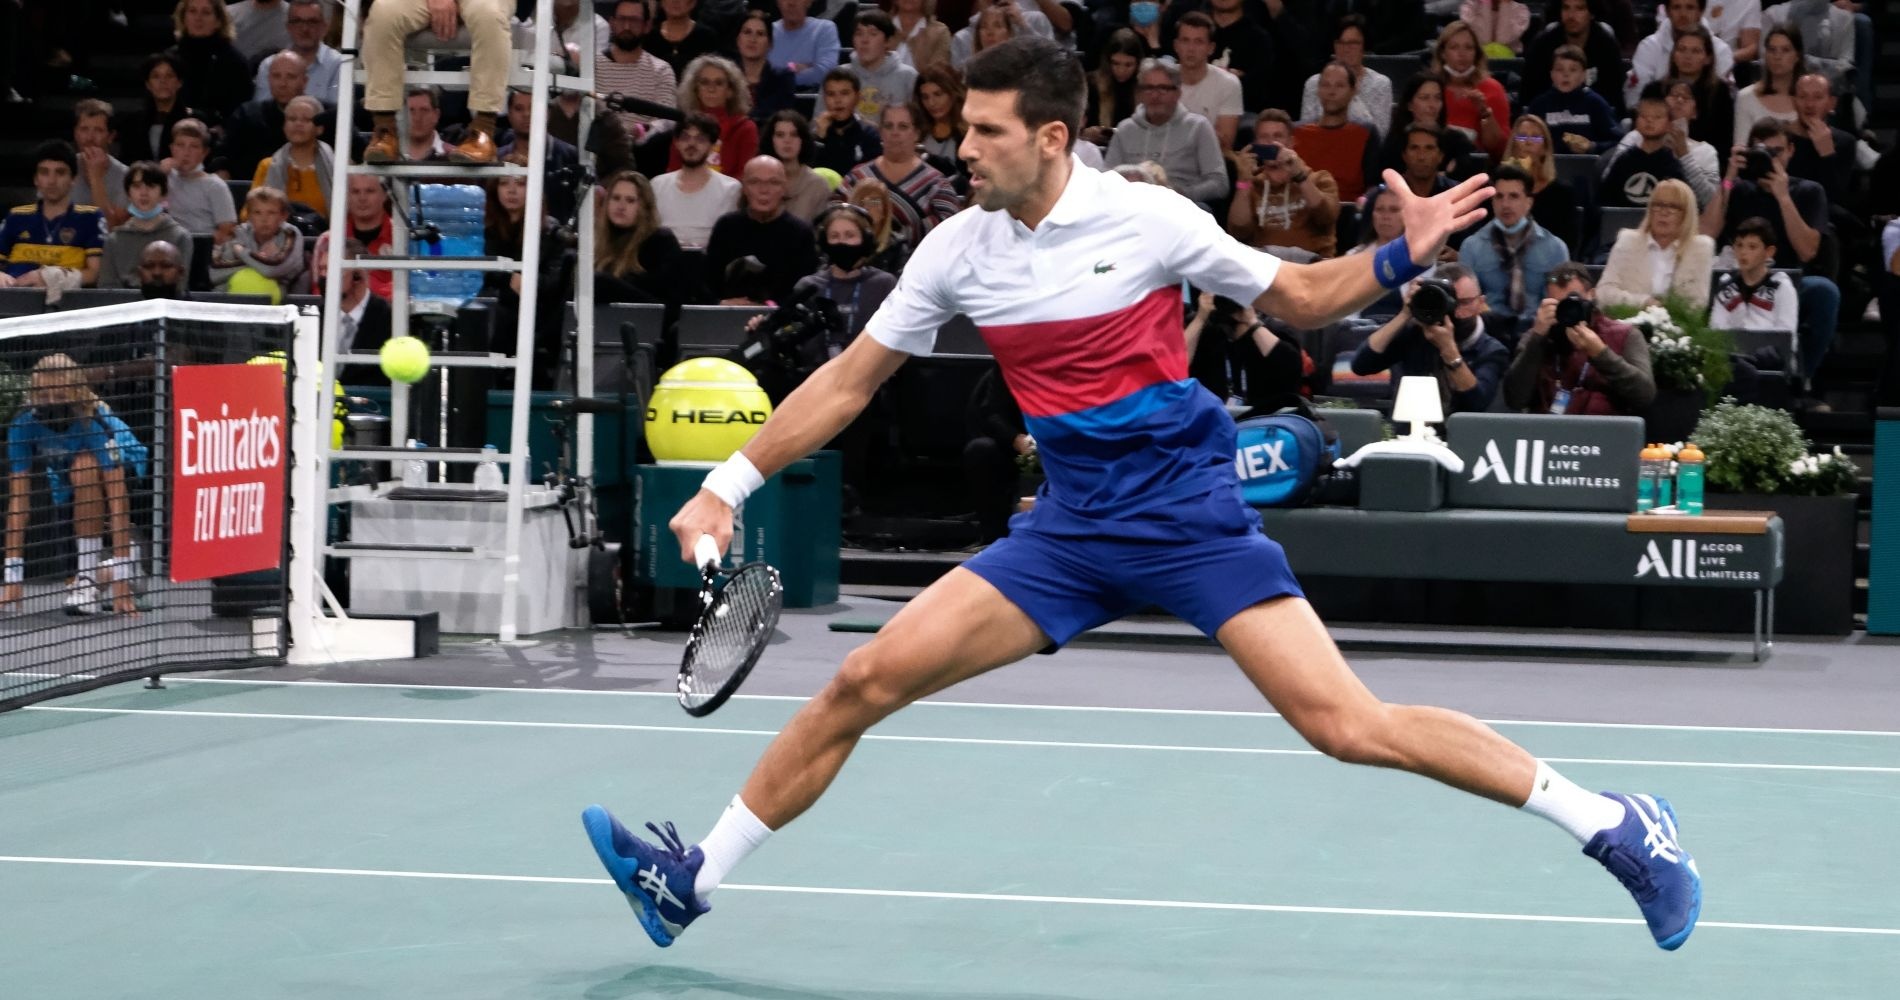 Djokovic on media coverage and Australian Open